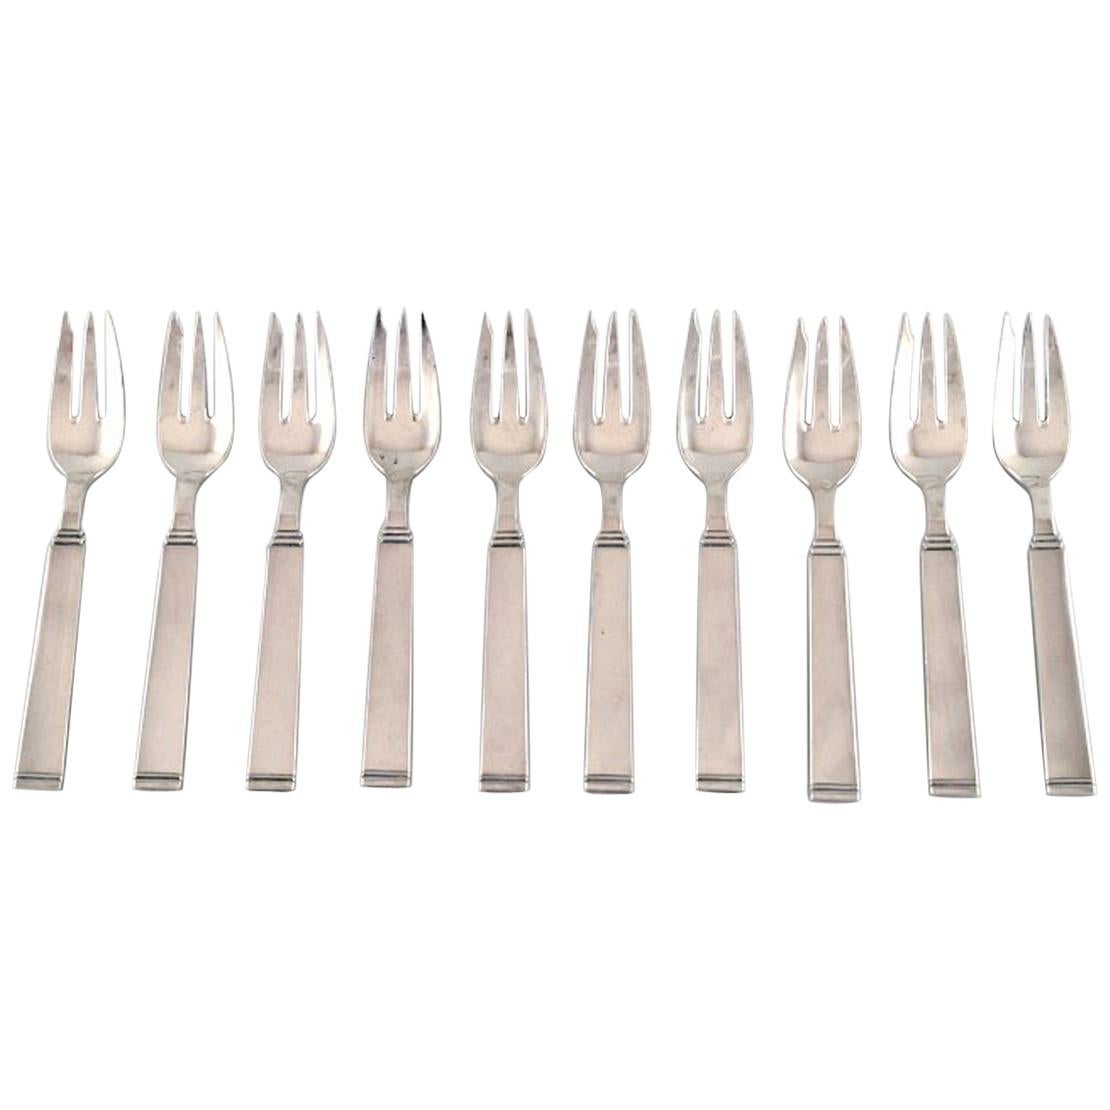 Horsens Denmark, "Funkis III", 10 Pcs, Pastry Fork, Art Deco Silver Cutlery